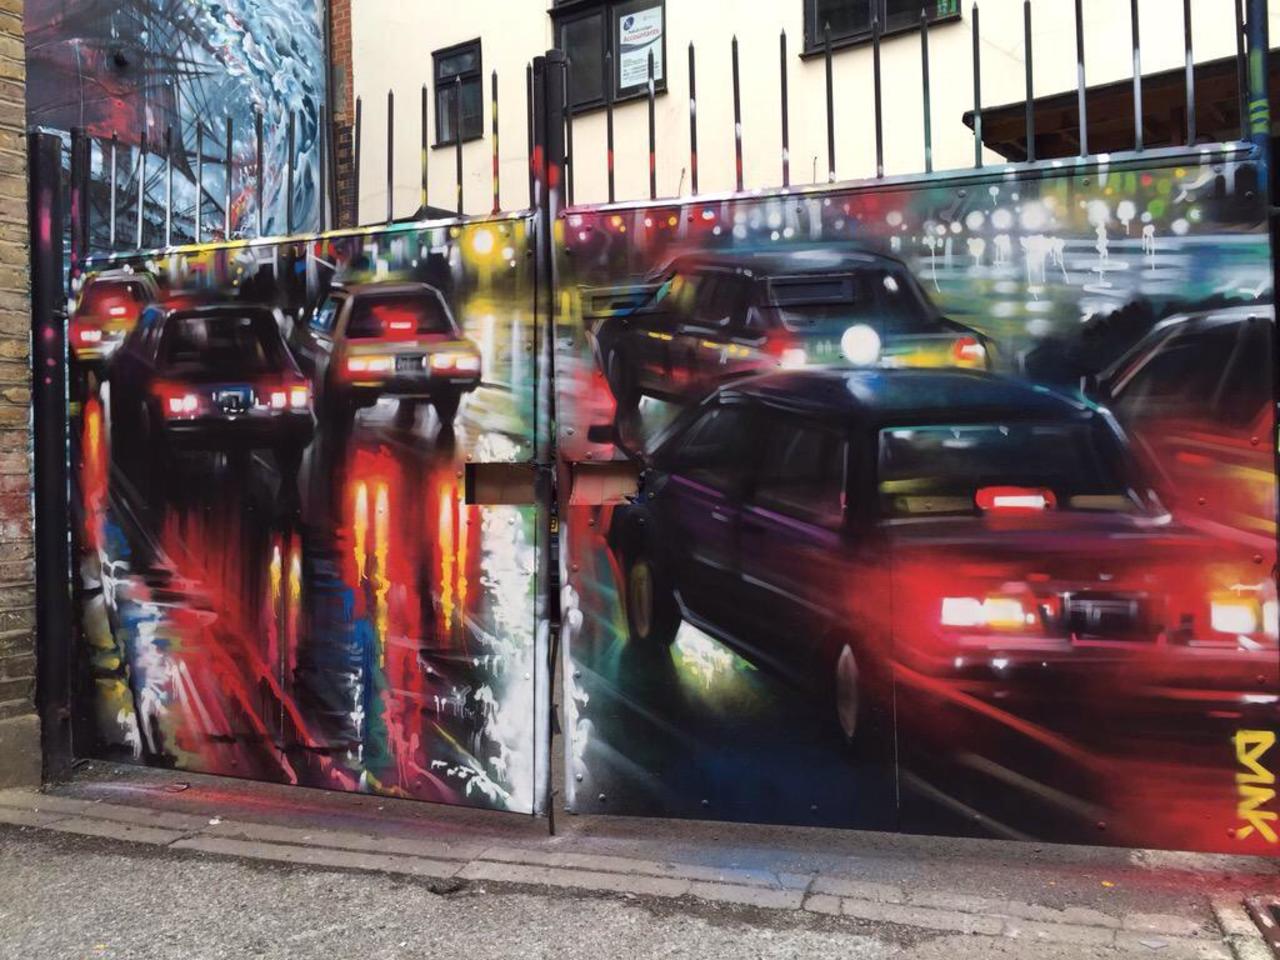 New Street Art by DanKitchener in Brick Lane London 

#art #graffiti #mural #streetart http://t.co/4oA18nILgF